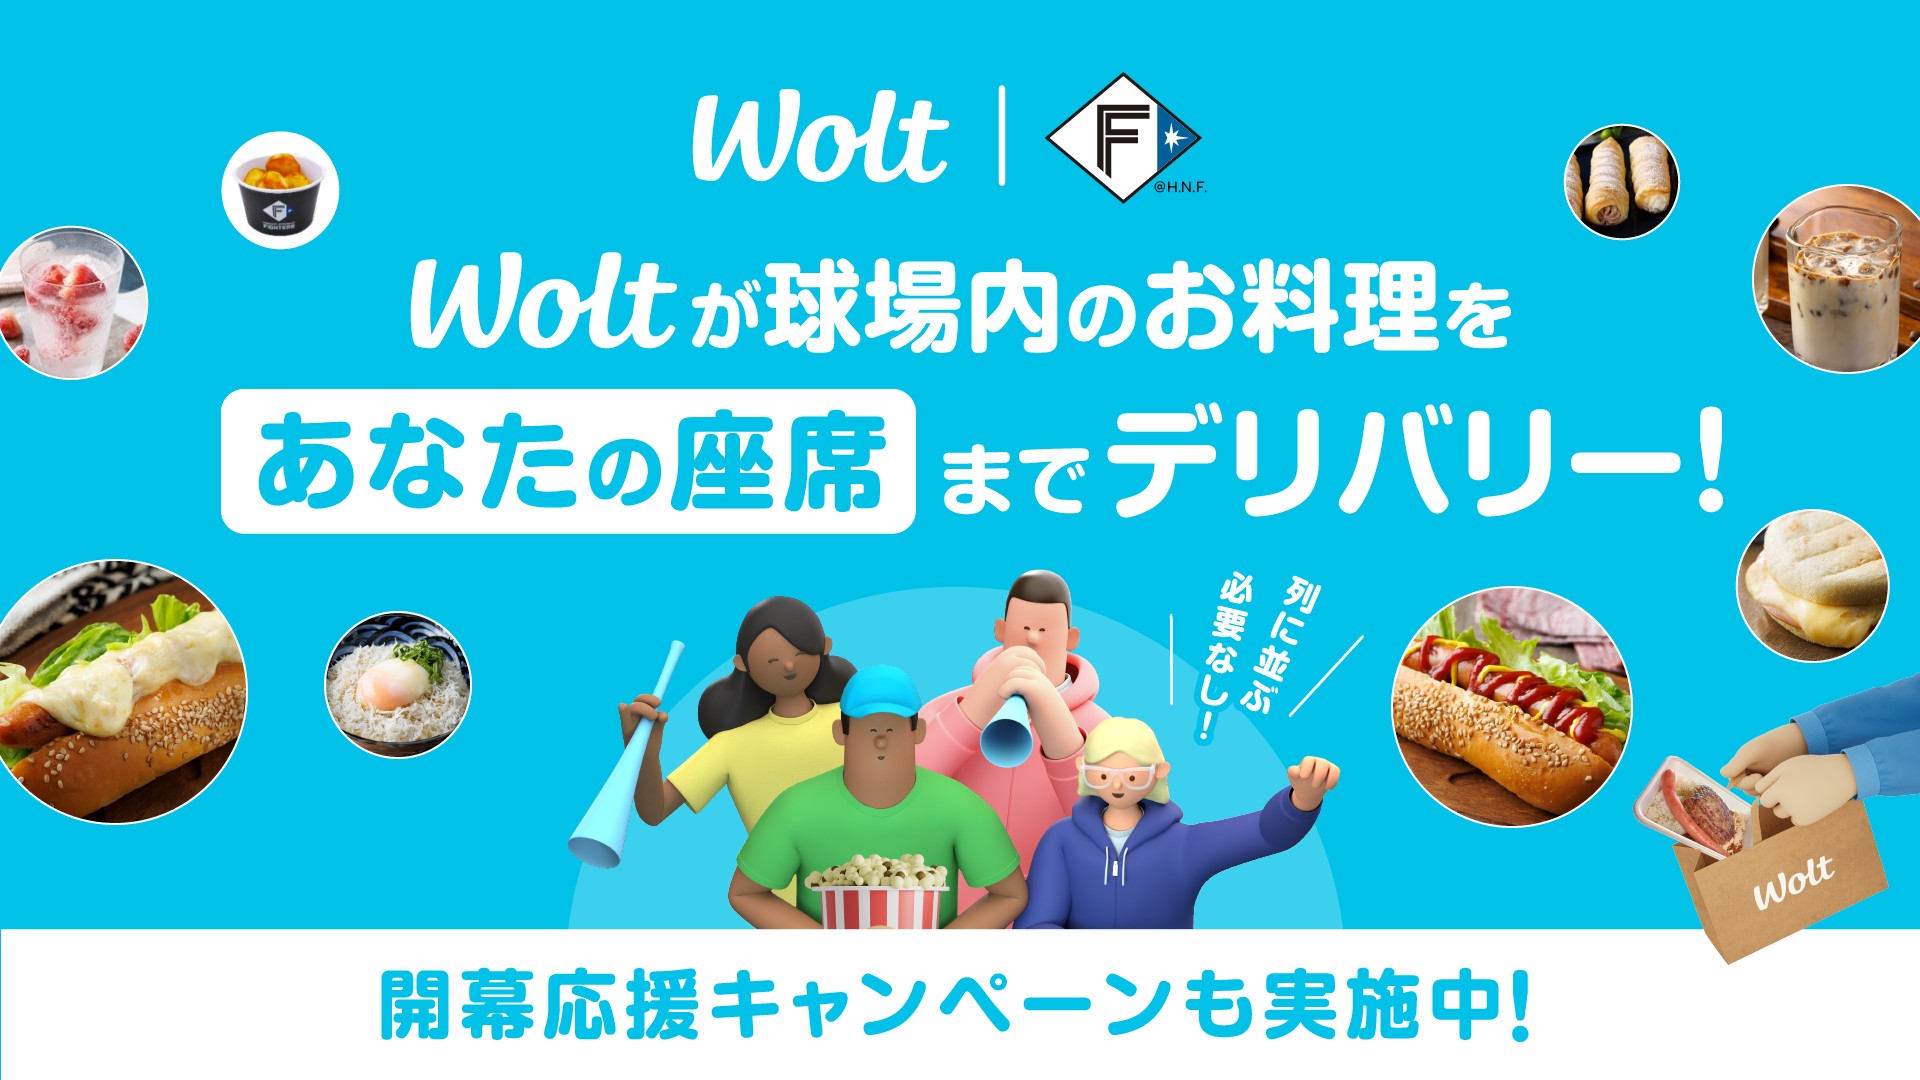 Wolt (ウォルト) (@WoltJapan) / X